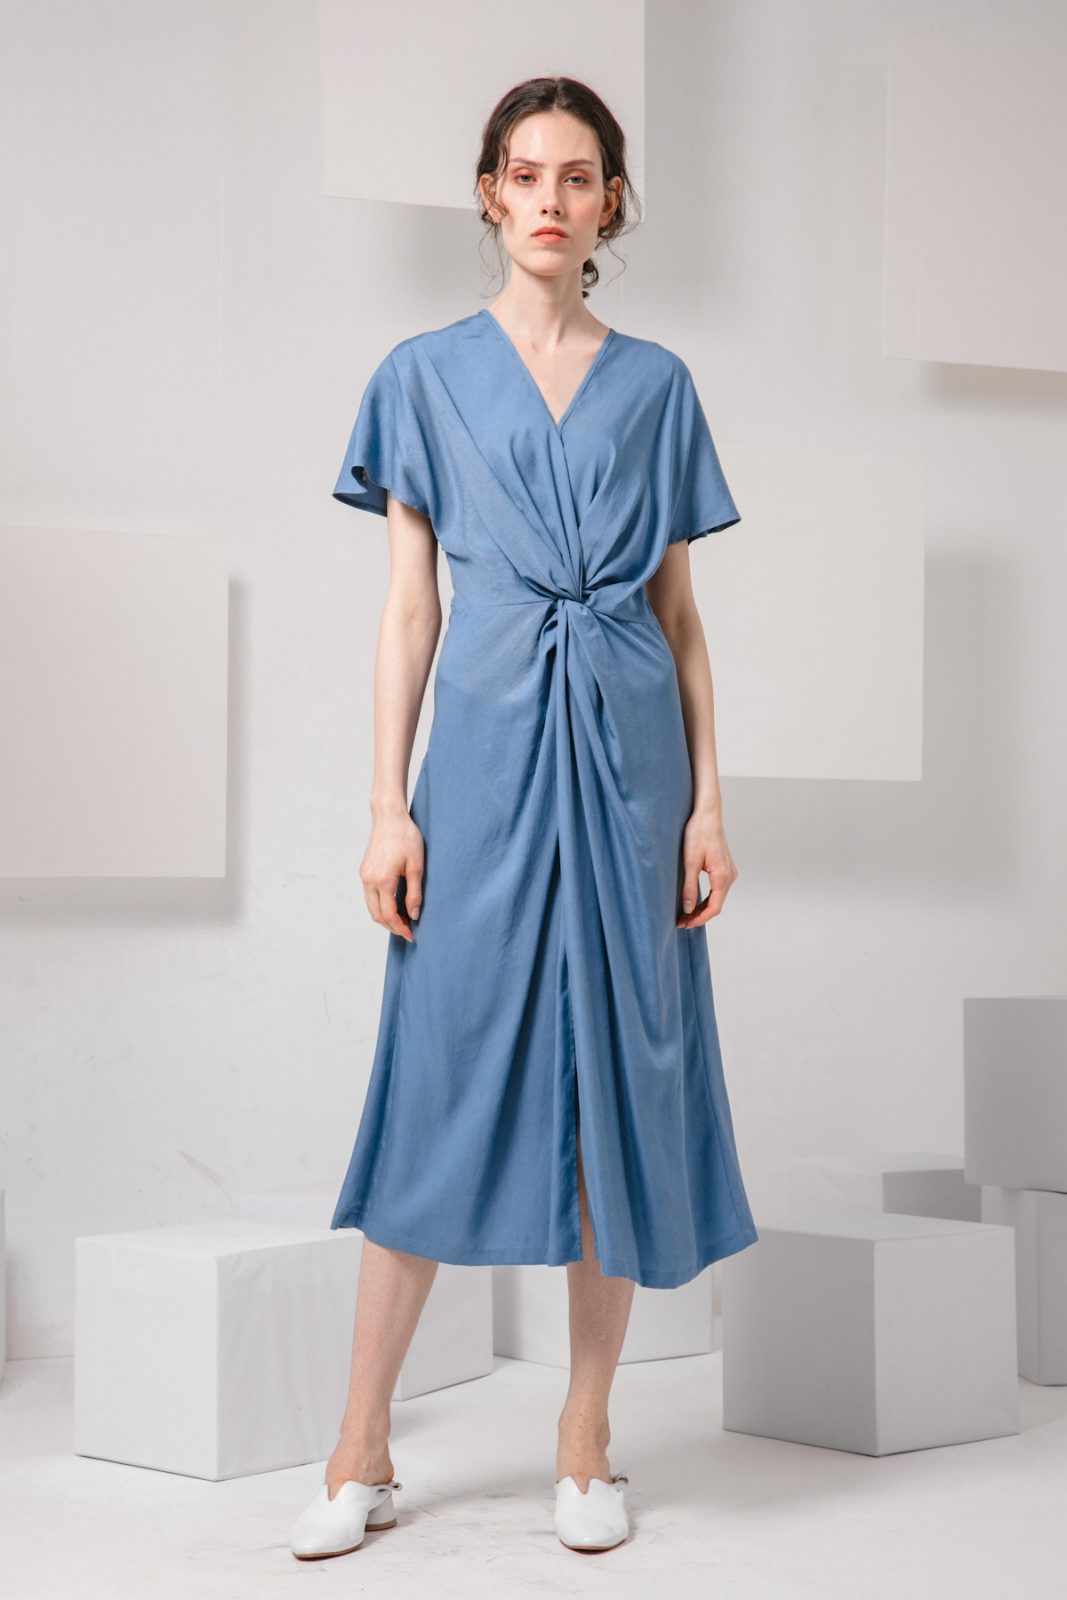 SKYE modern minimalist women clothing fashion Calla Dress blue